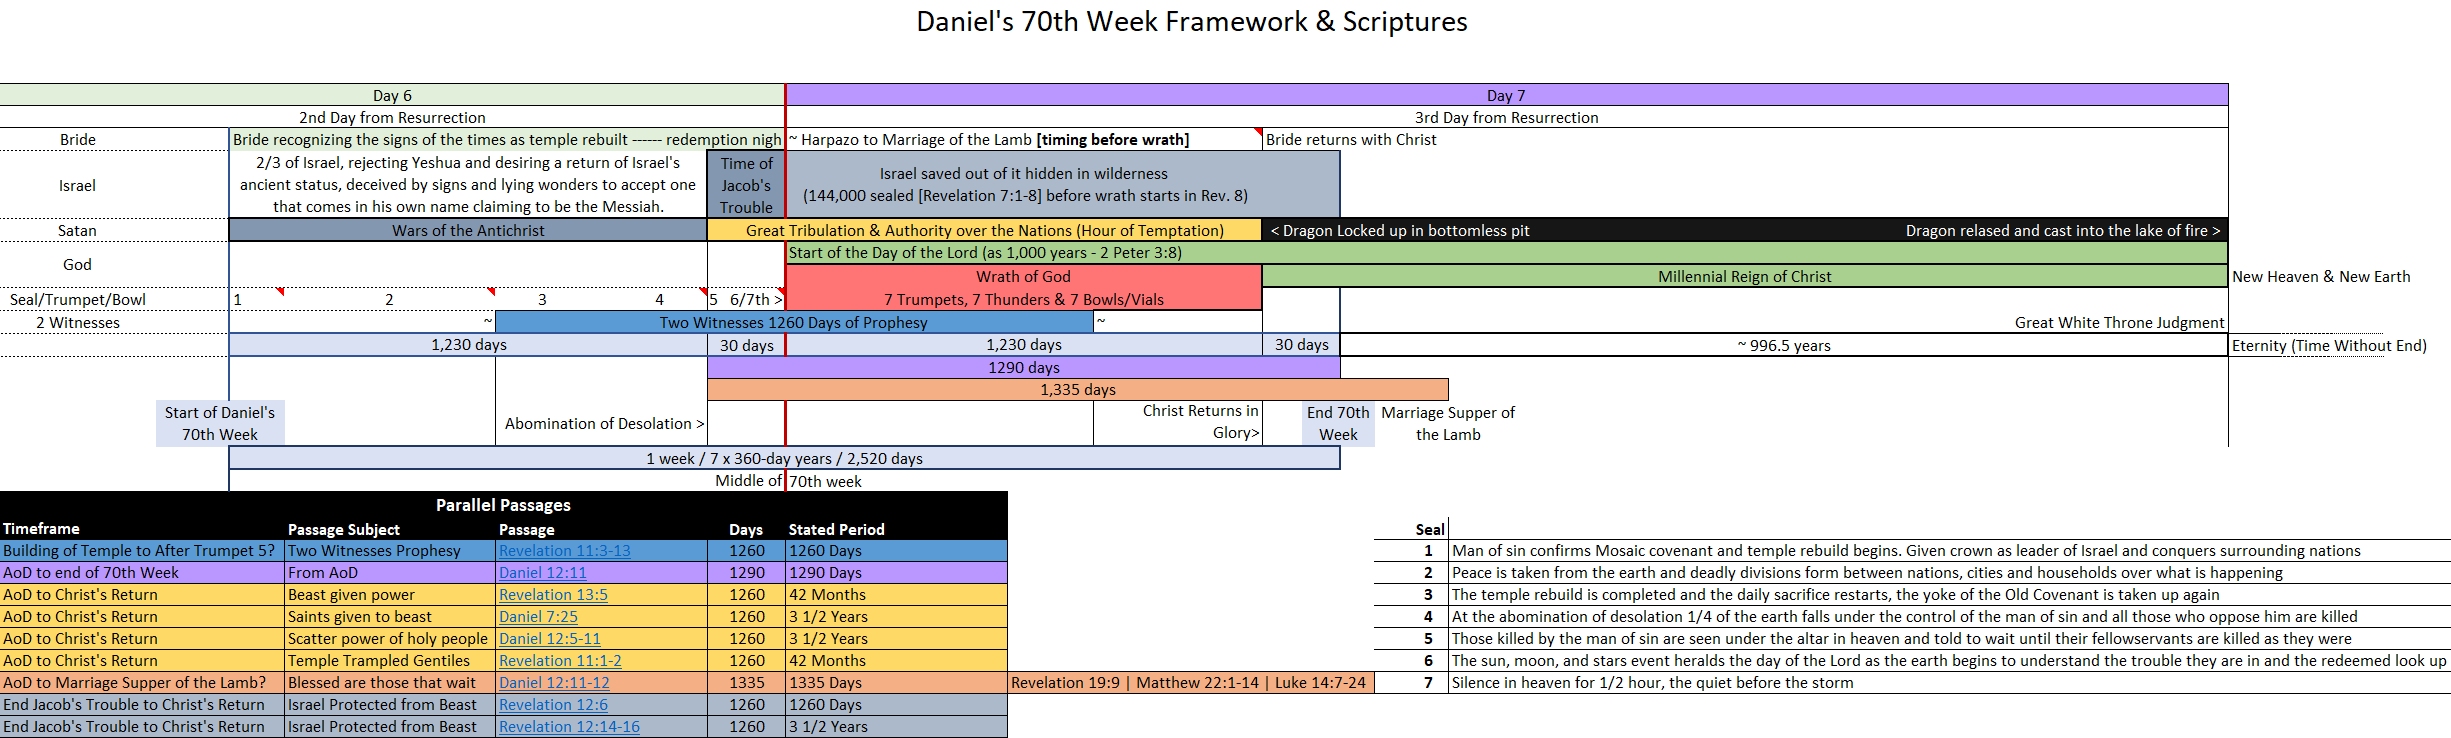 Daniel's 70th Week Framework